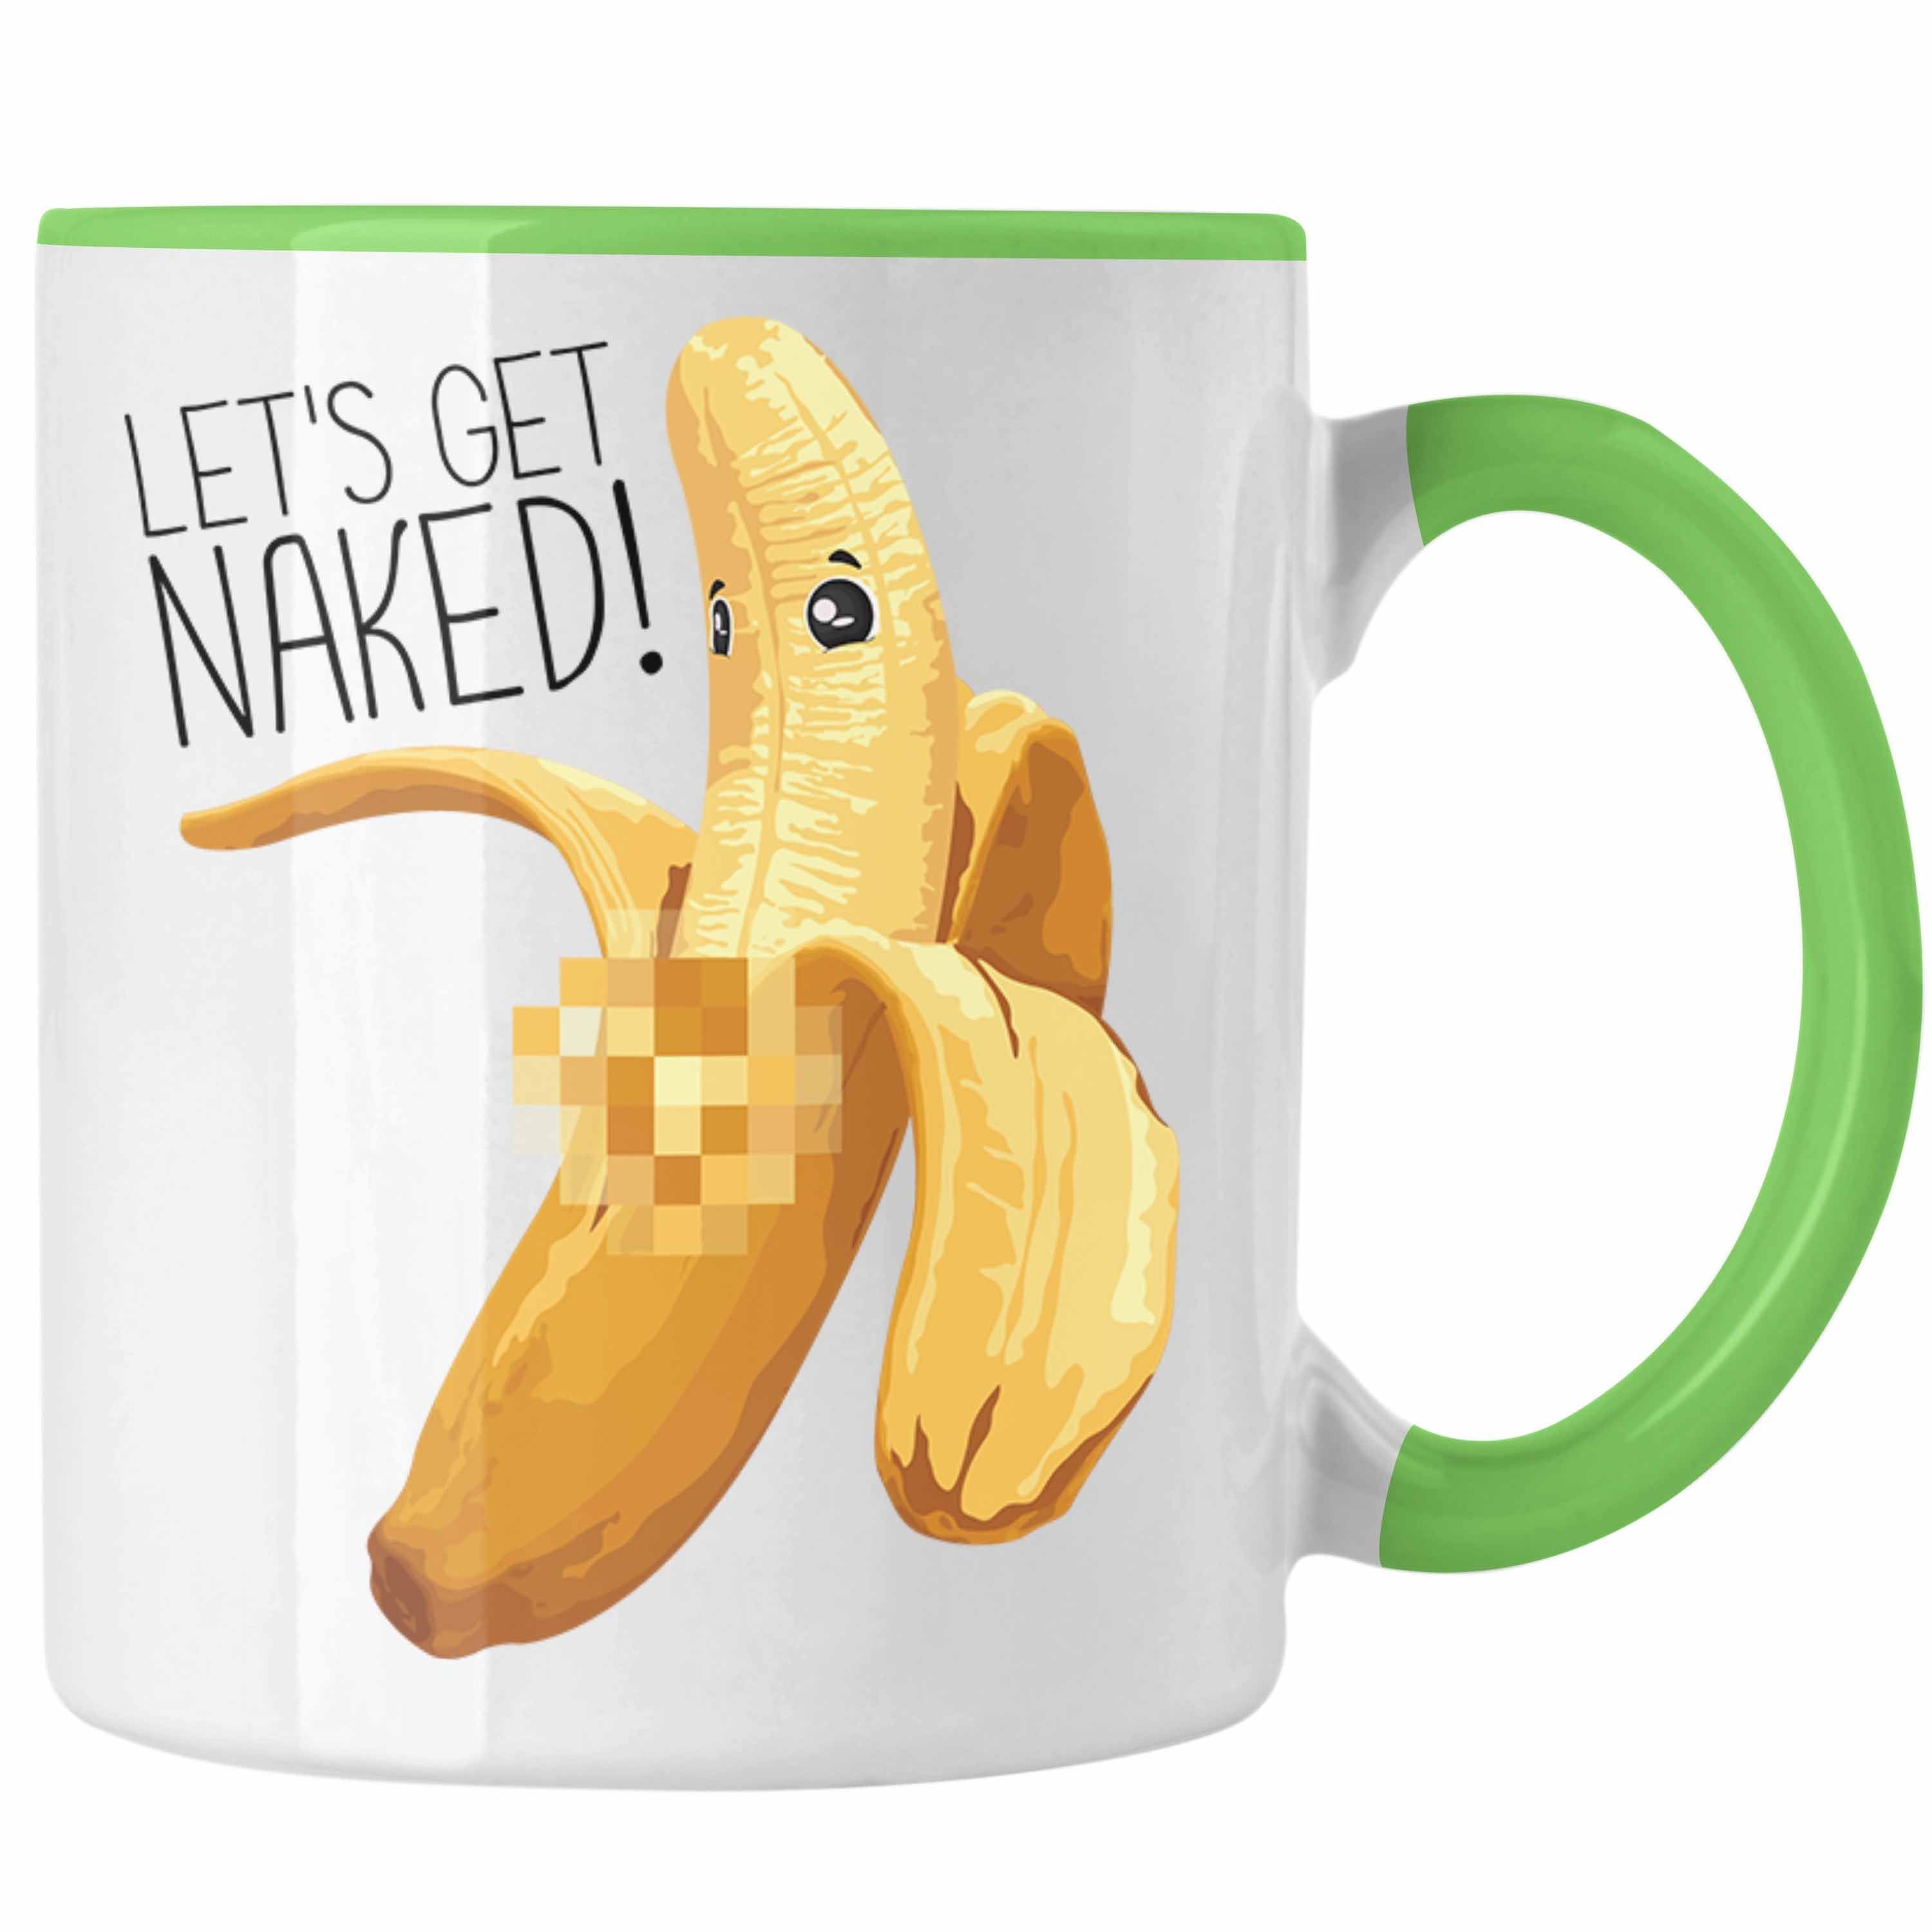 Trendation Tasse Banane Lets Get Naked Tasse Geschenk Striptease Erwachsener Humor Bech Grün